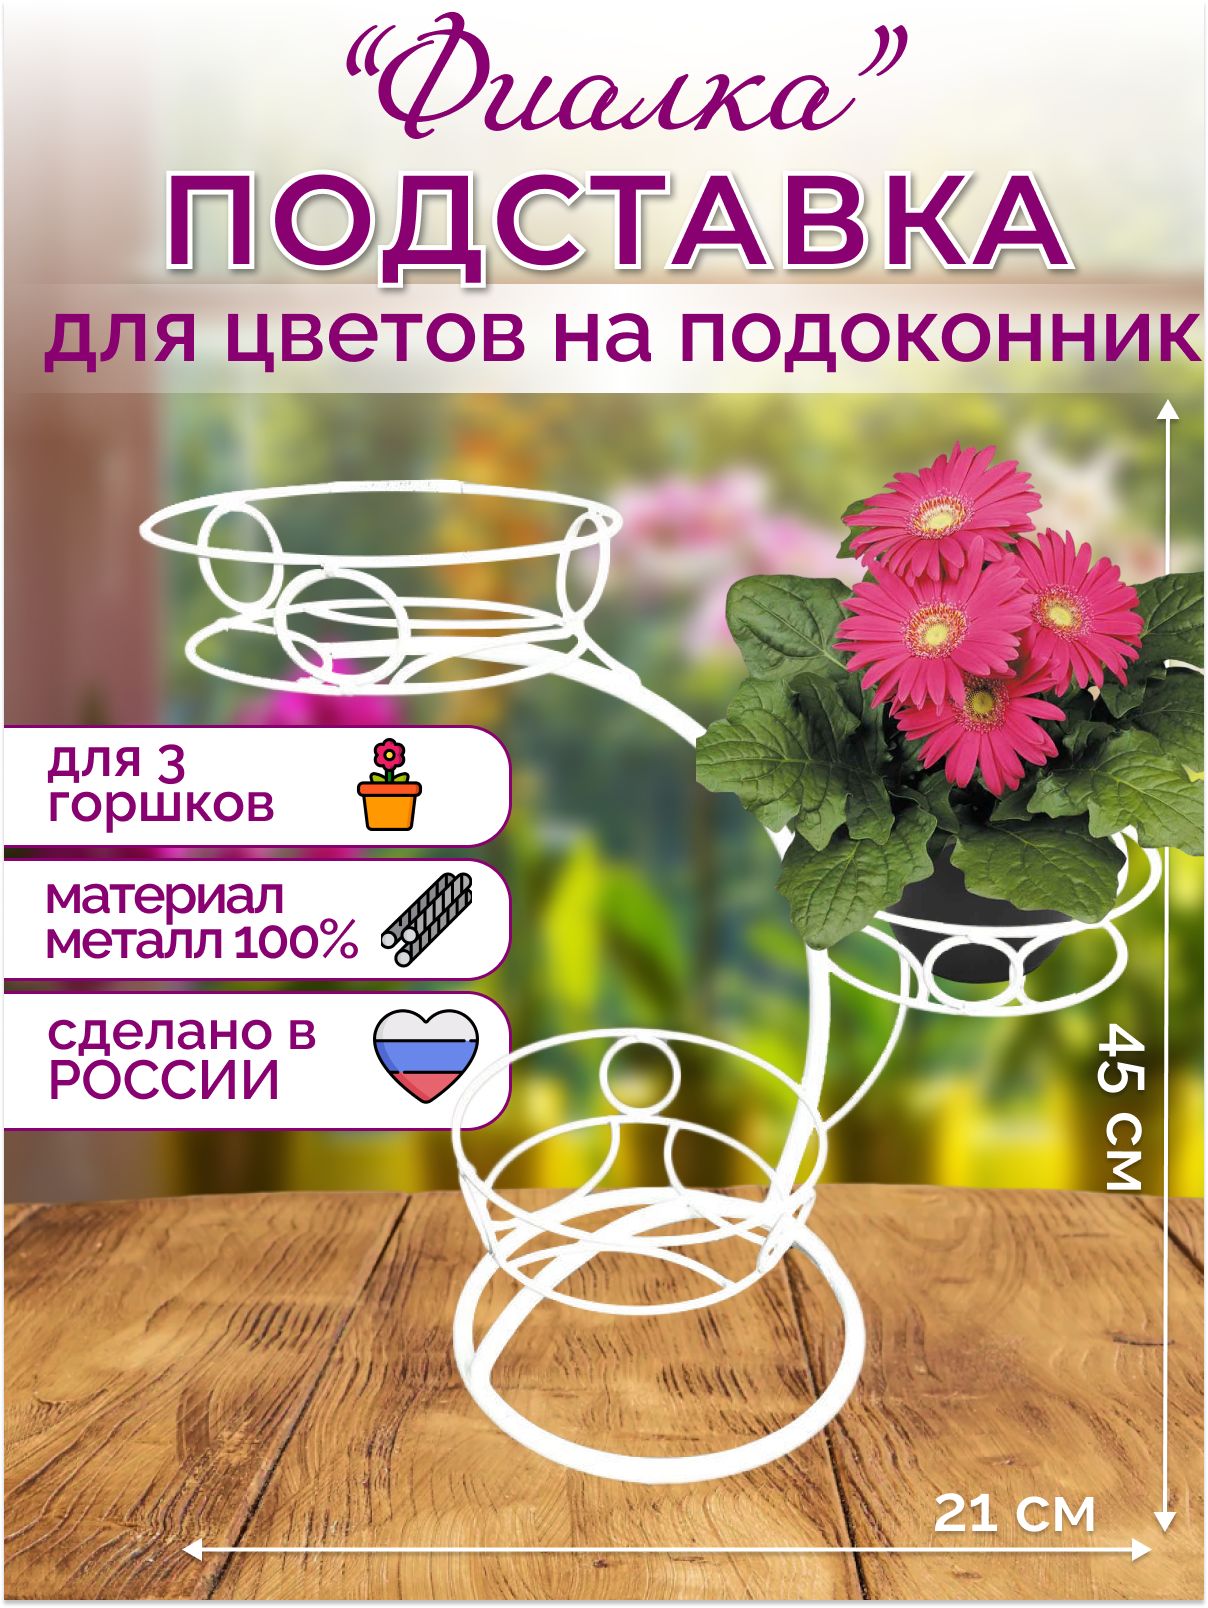 Подставка для цветов Фиалка 4 ПДЦ - IVDshop